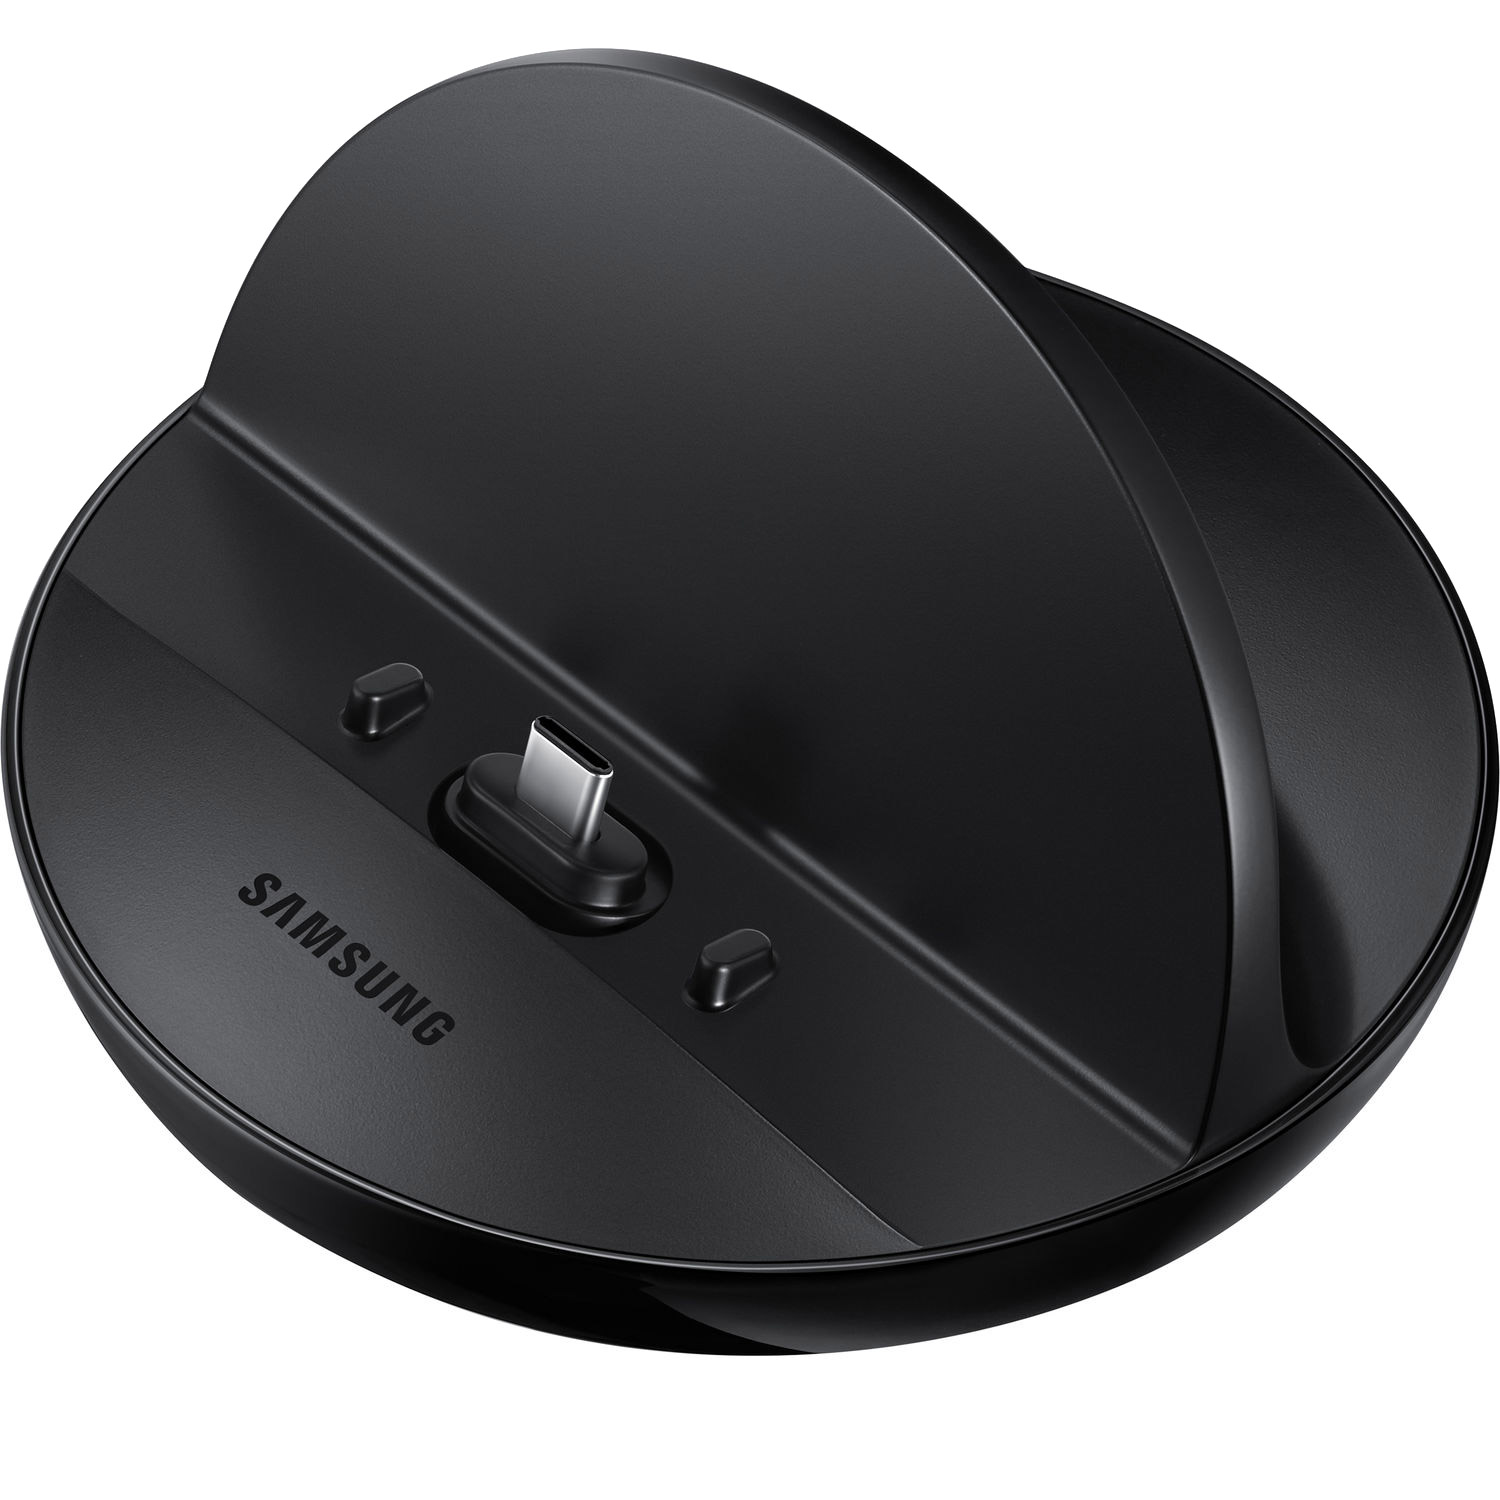 Samsung USB Type-C Charging Dock for 2017 Galaxy Tab A 8.0